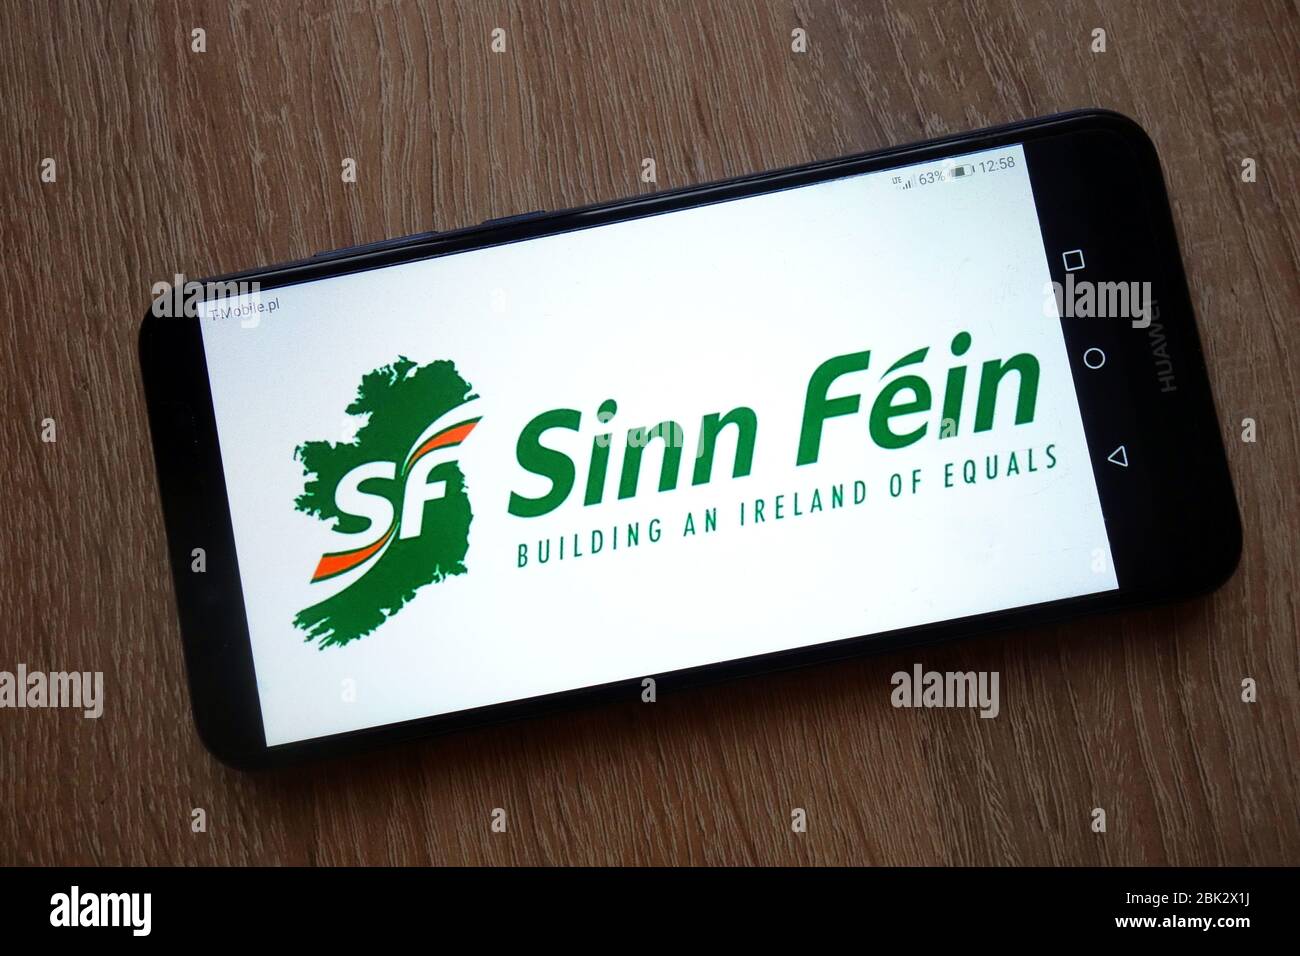 Sinn Fein Irish republican political party logo displayed on smartphone Stock Photo